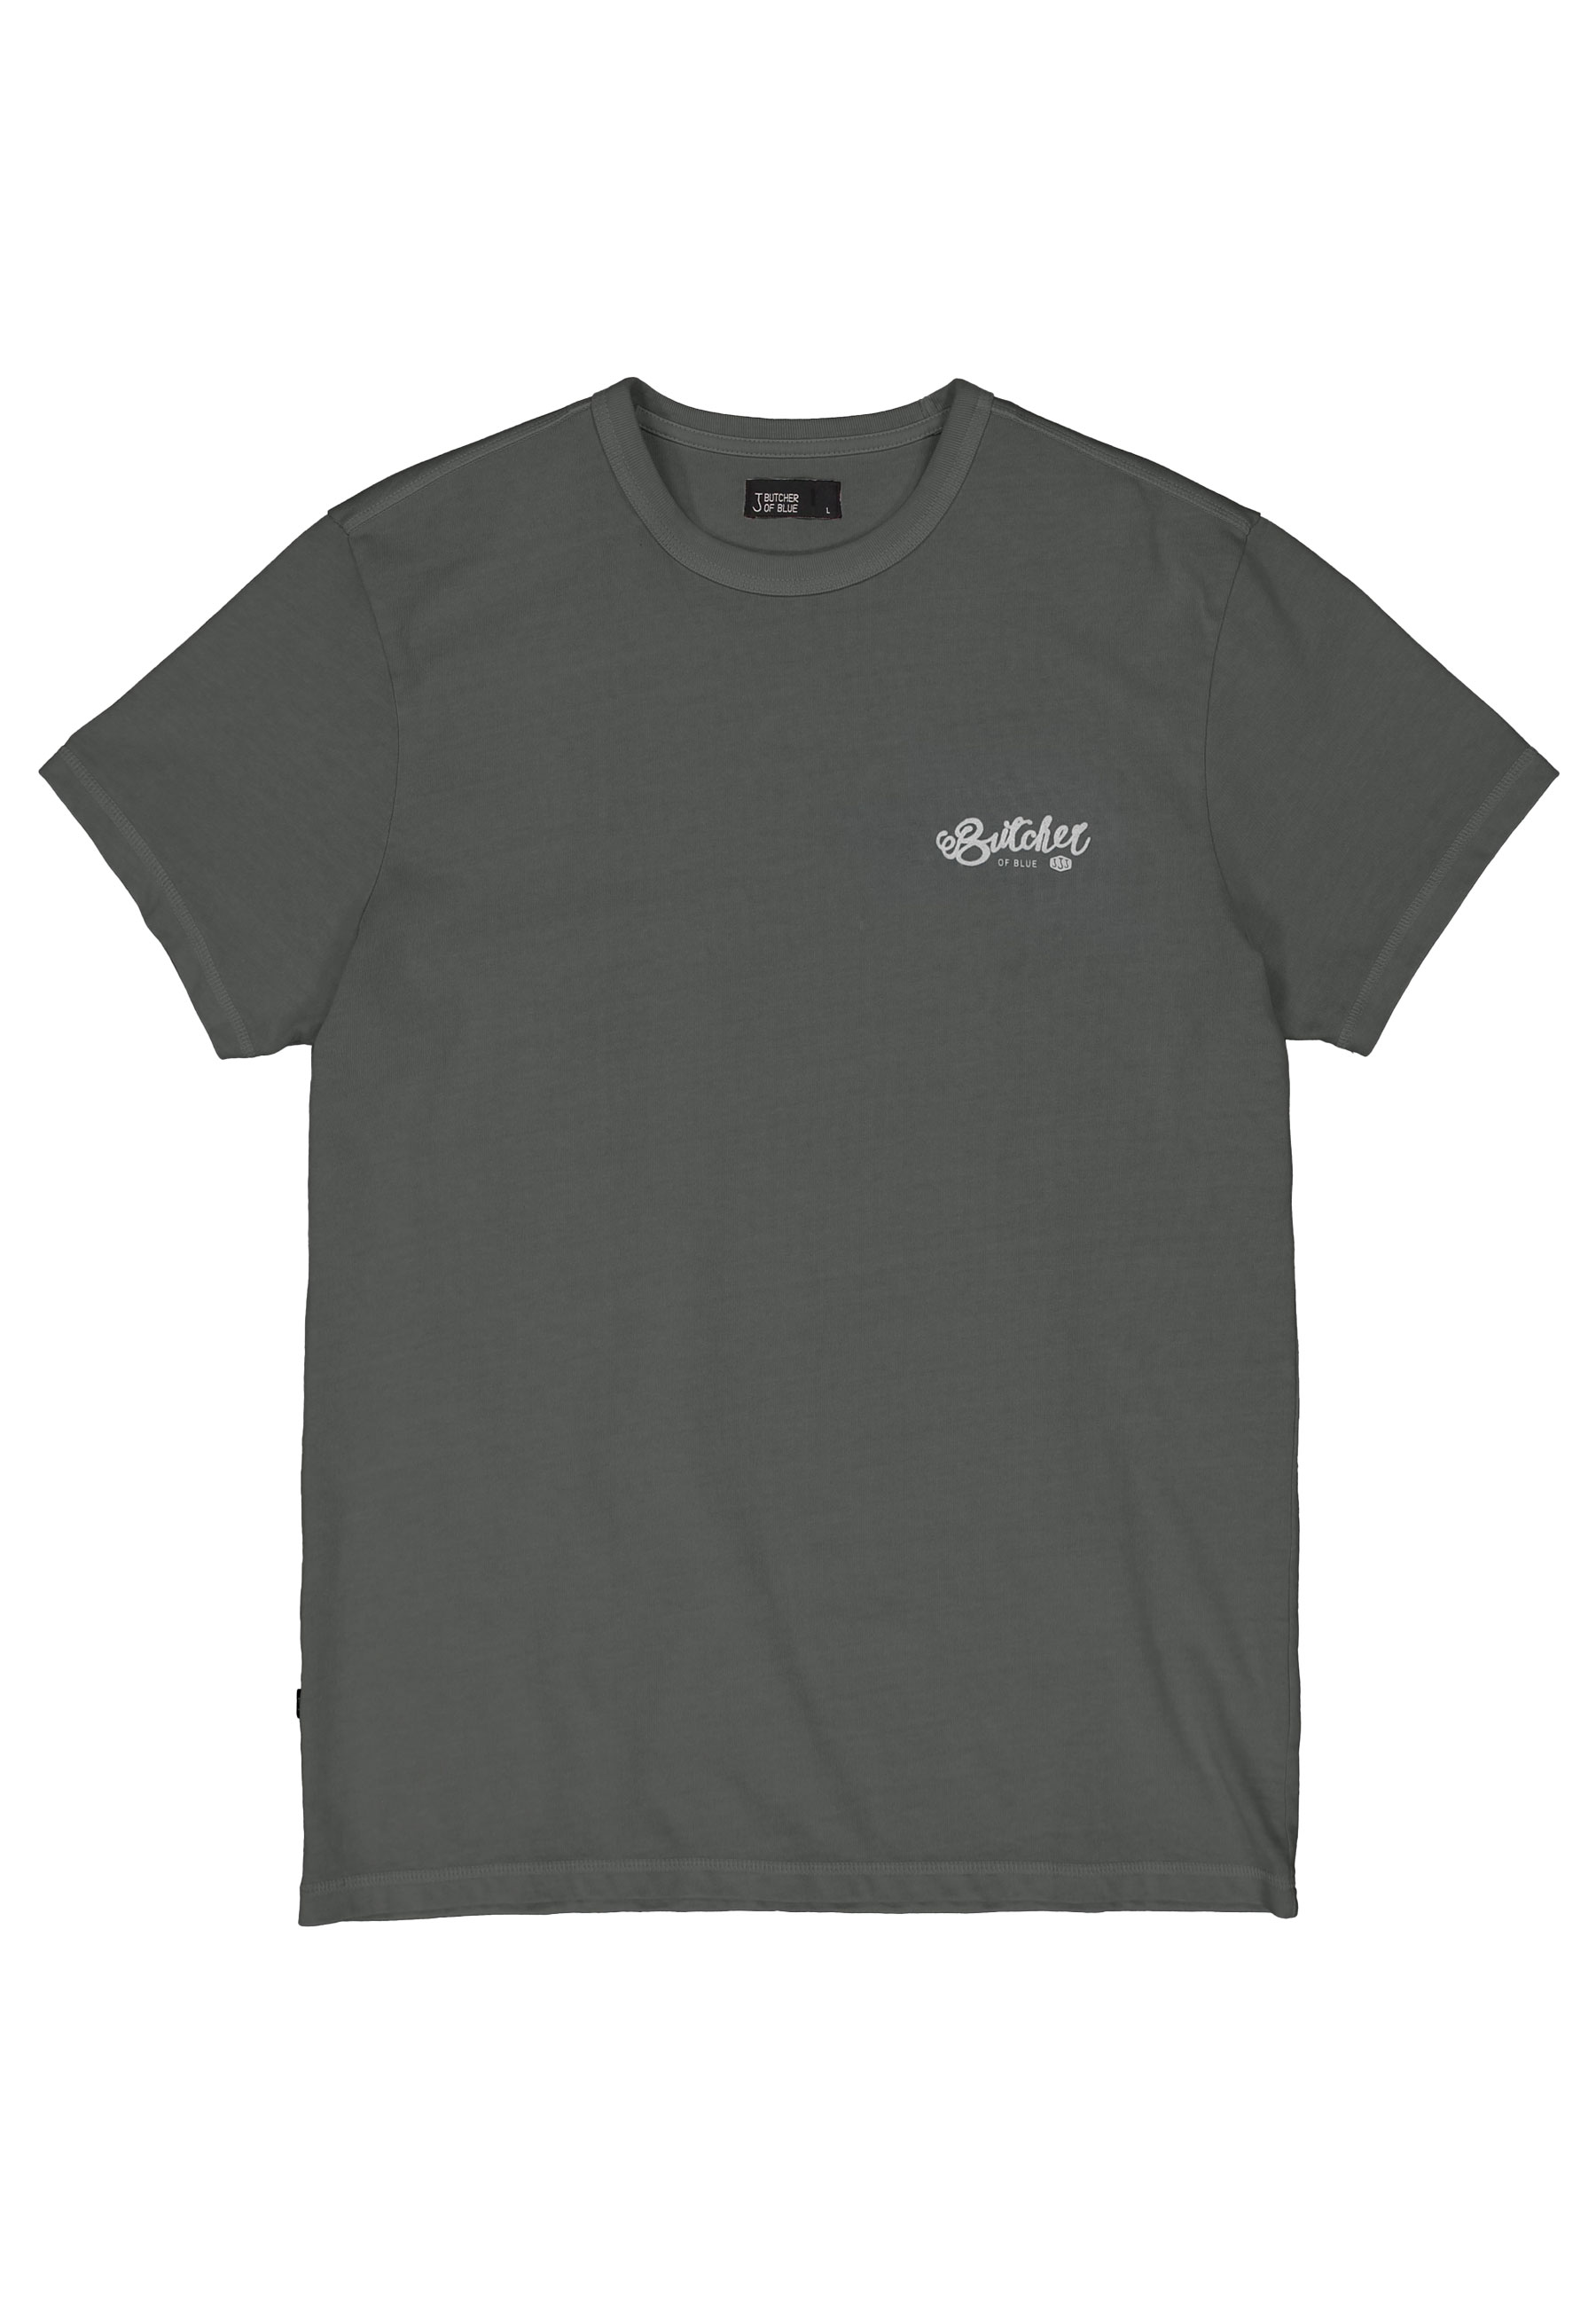 Shirt Donkergroen Army classic t-shirts donkergroen